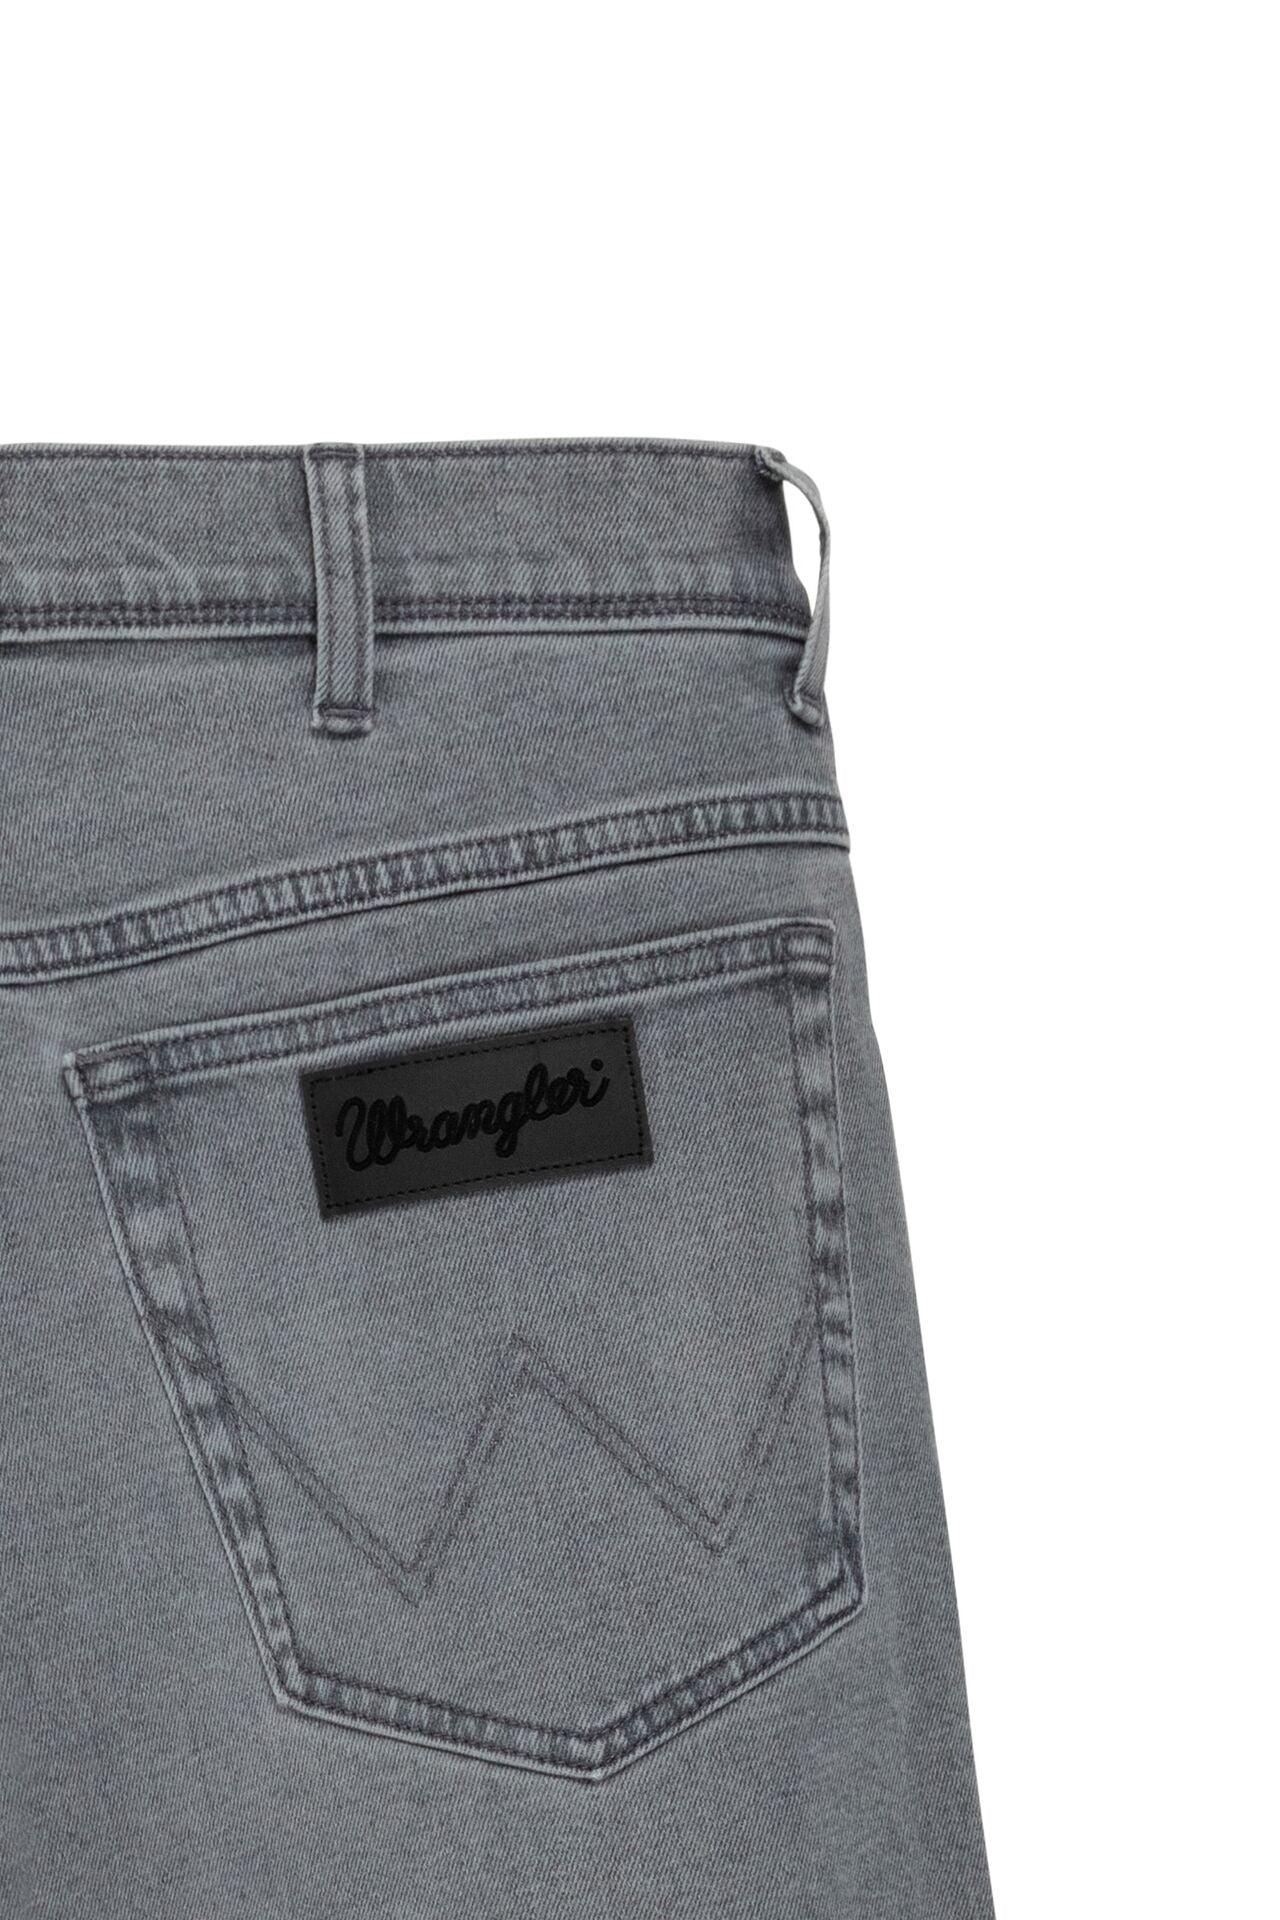 WRANGLER - ג'ינס TEXAS קצר - MASHBIR//365